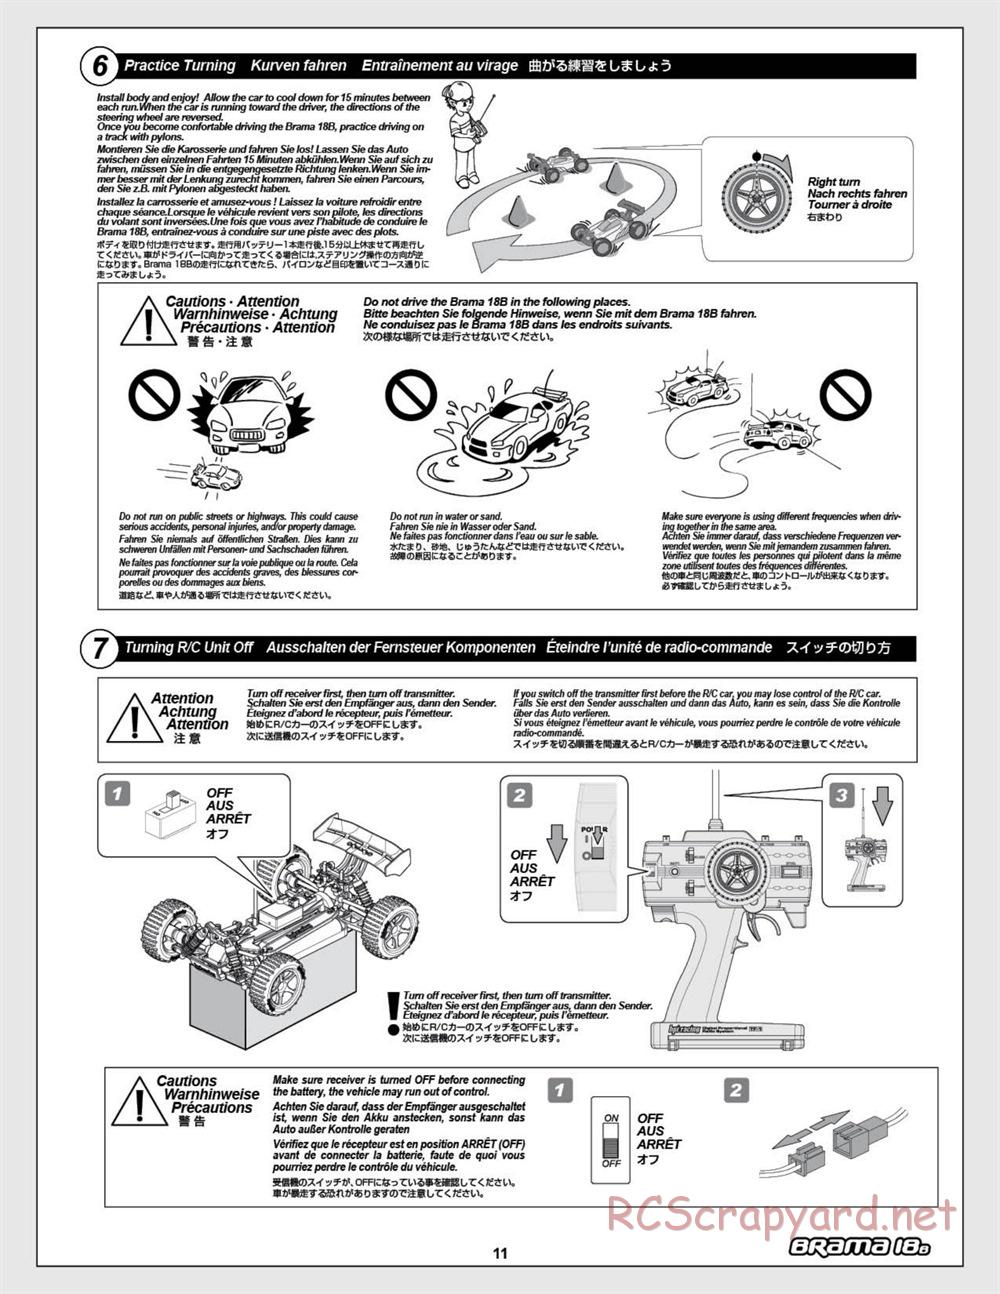 HPI - Brama 18B - Manual - Page 11